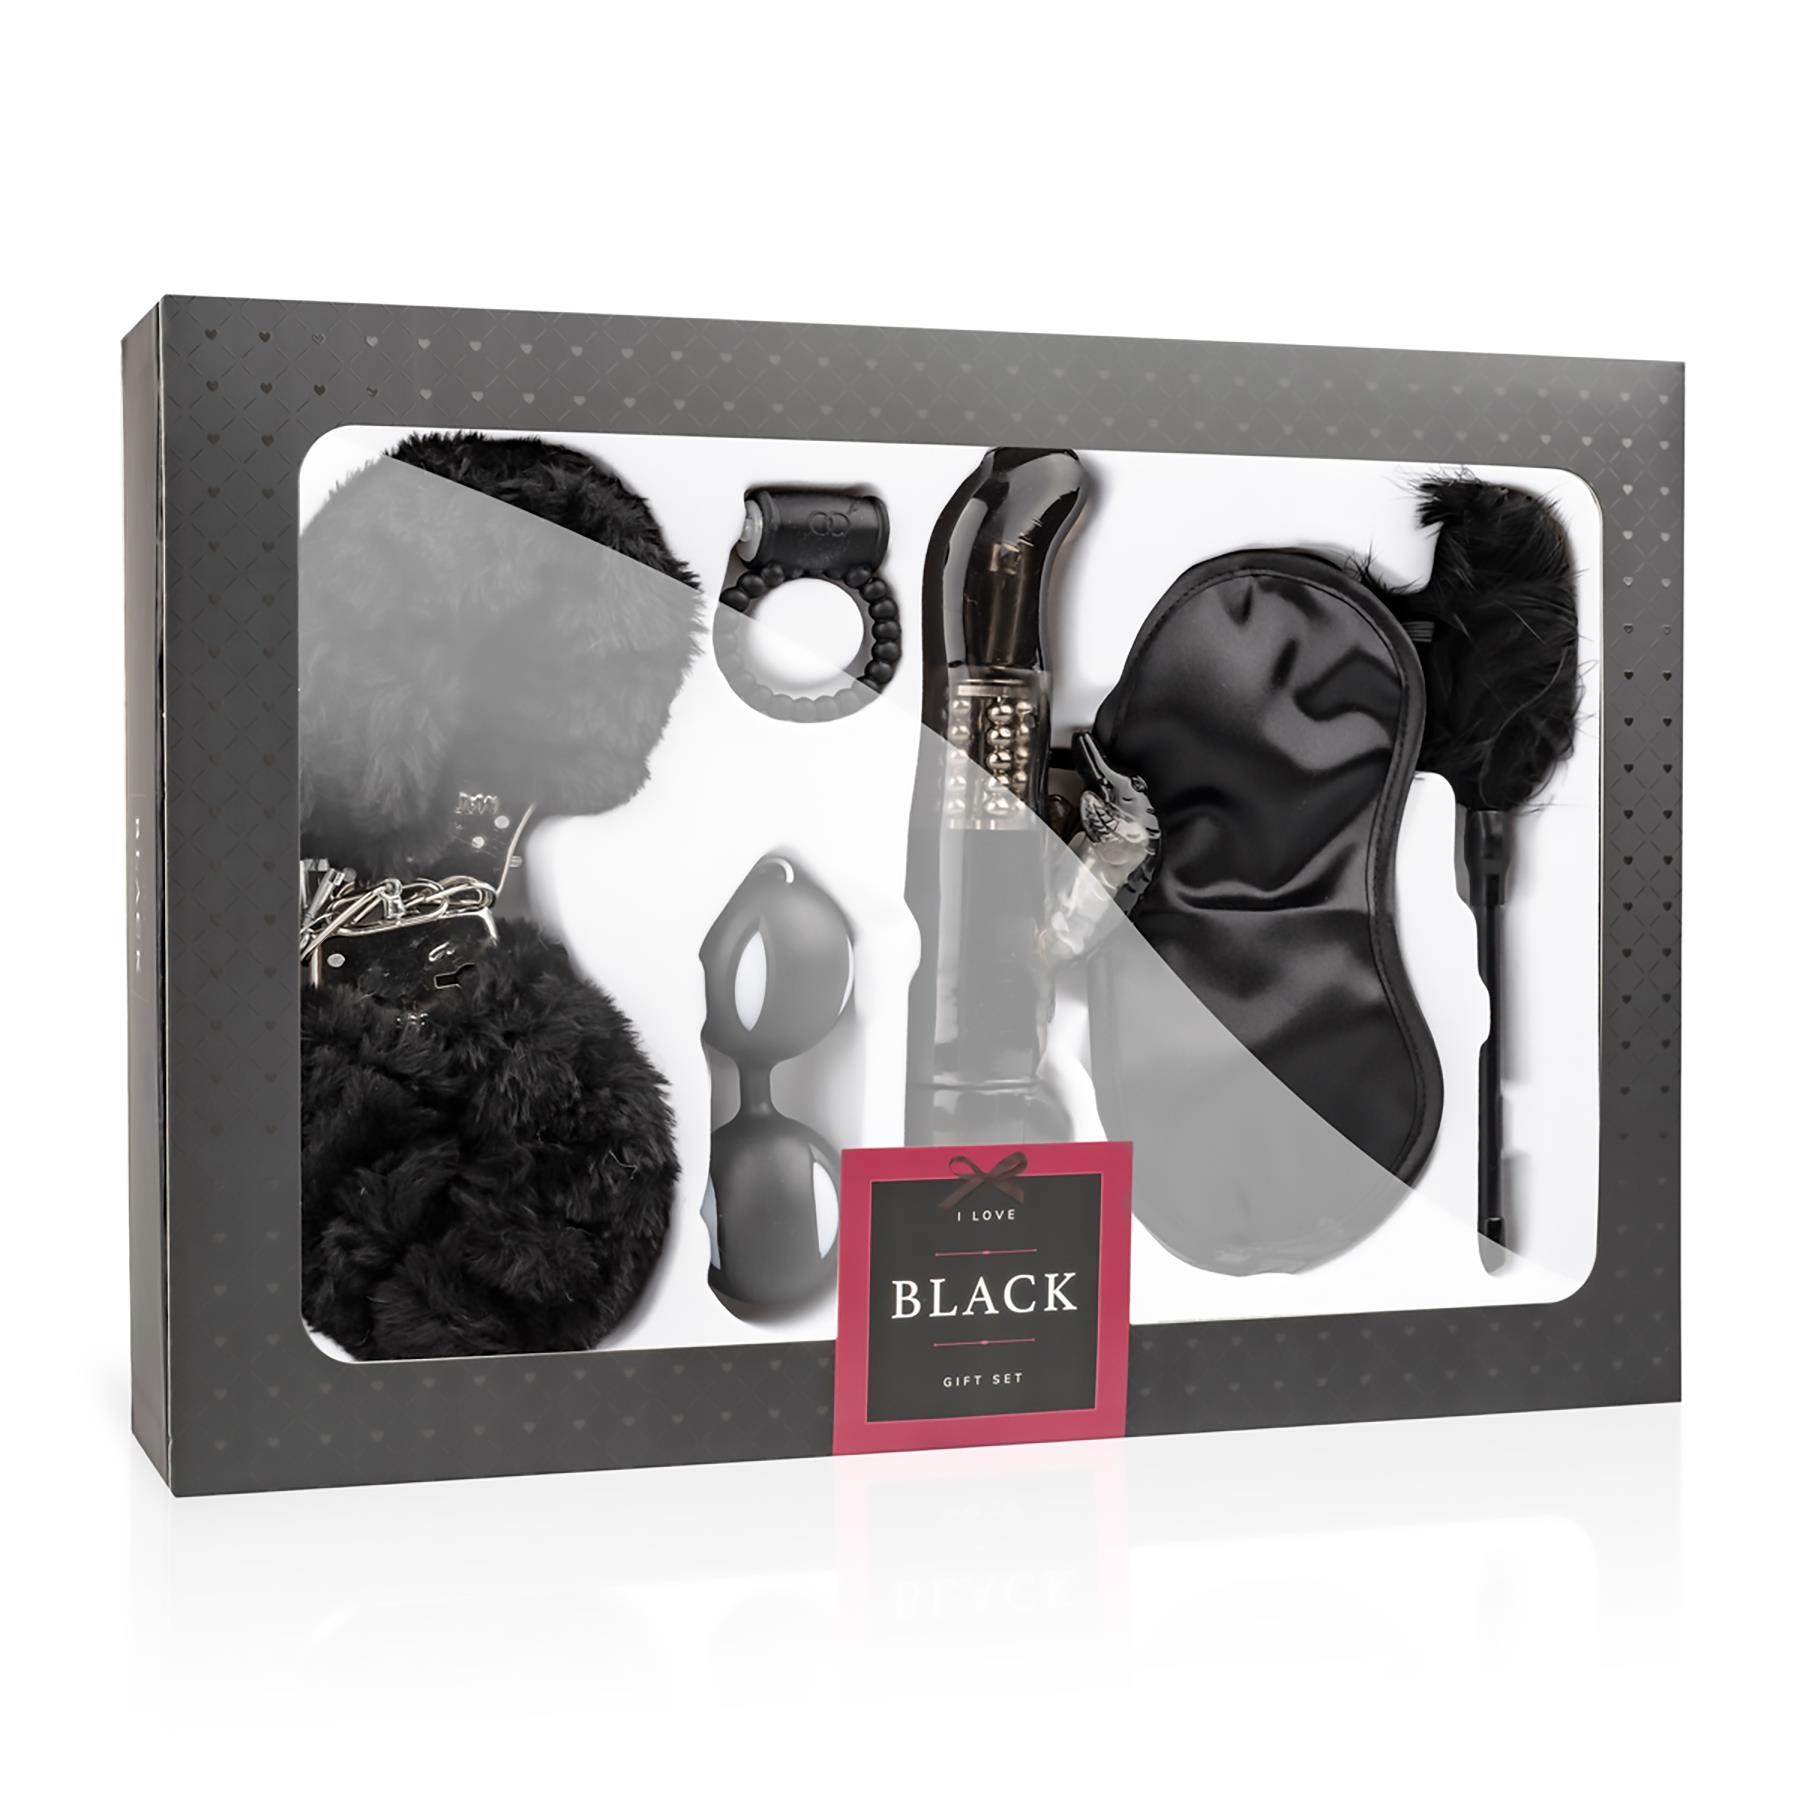 I Love Black Gift Set - Packaging Shot